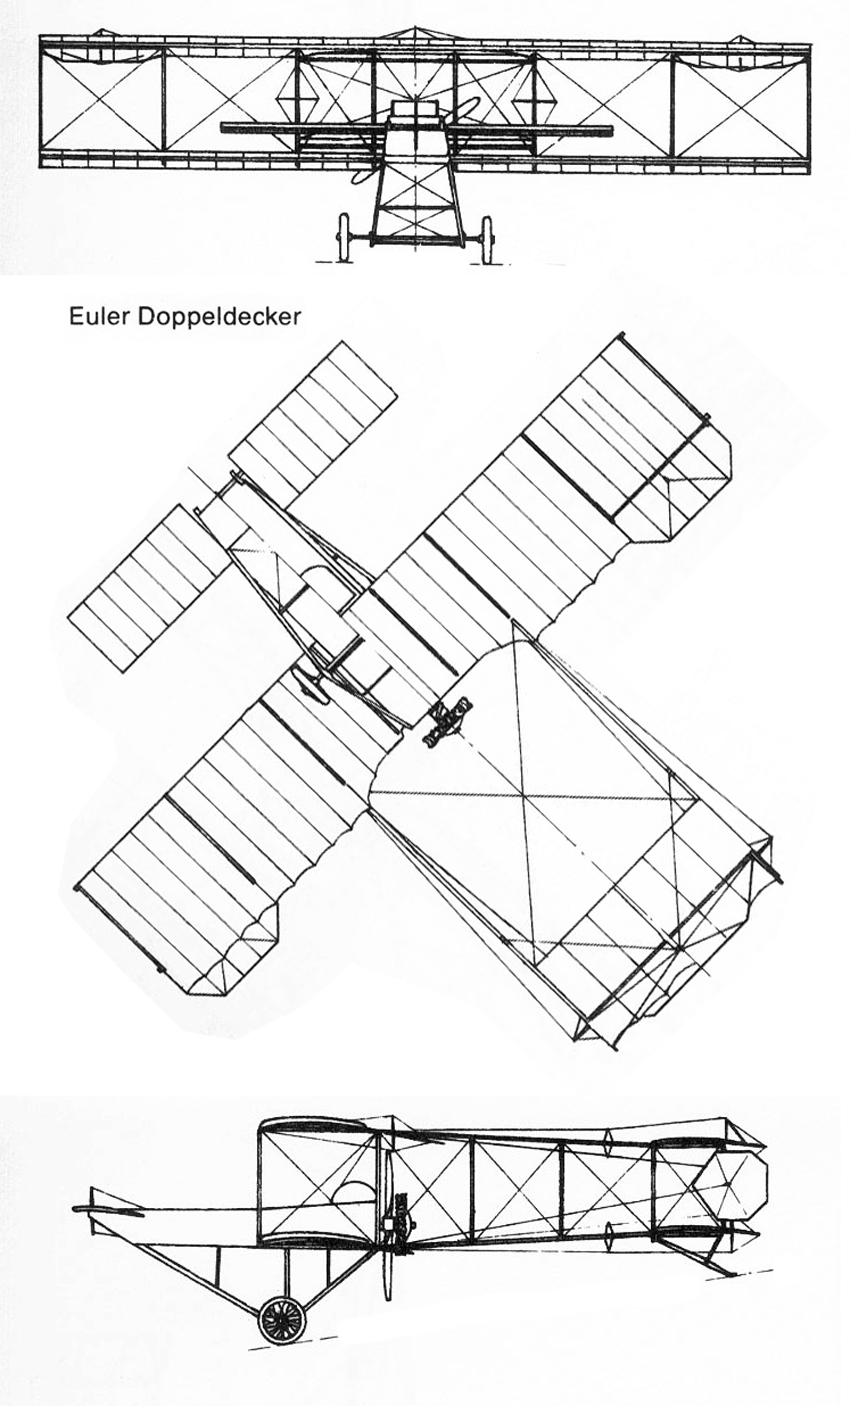 http://www.airwar.ru/image/idop/other1/eulerdoppeldecker/eulerdoppeldecker-1.gif